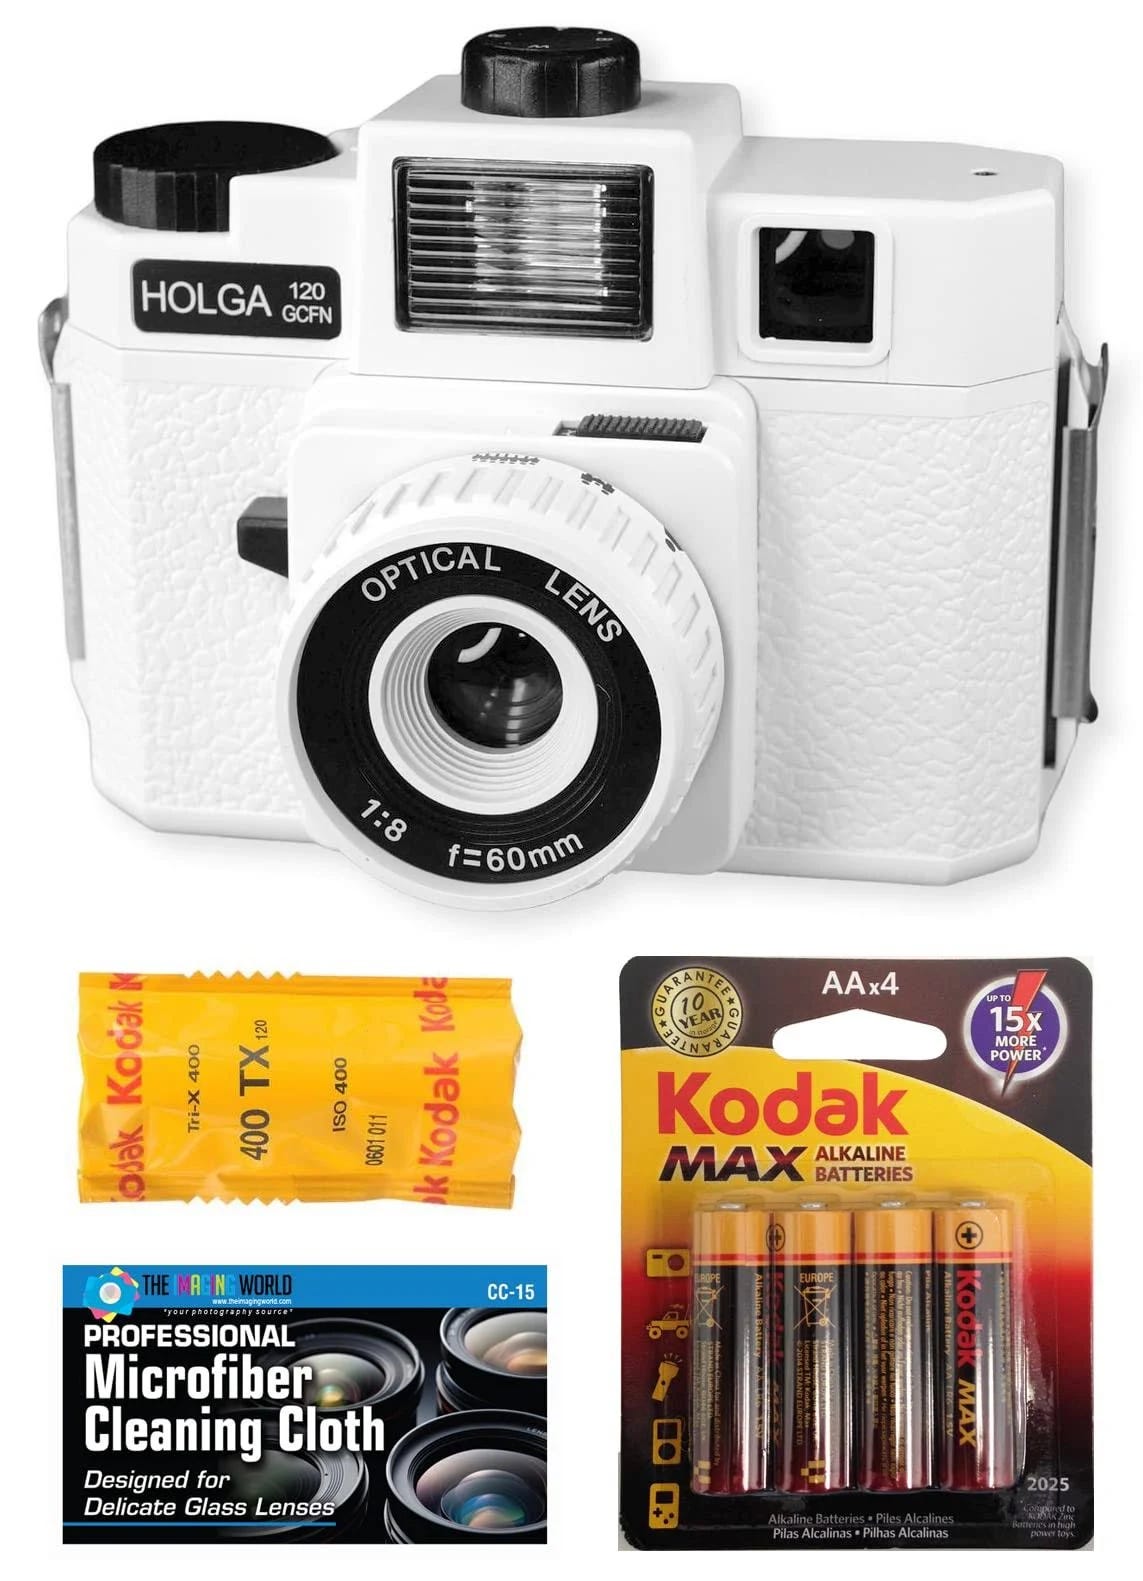 Holga 120GCFN Medium Format Film Camera with Built-In Flash and Kodak B&W Film Bundle | Image